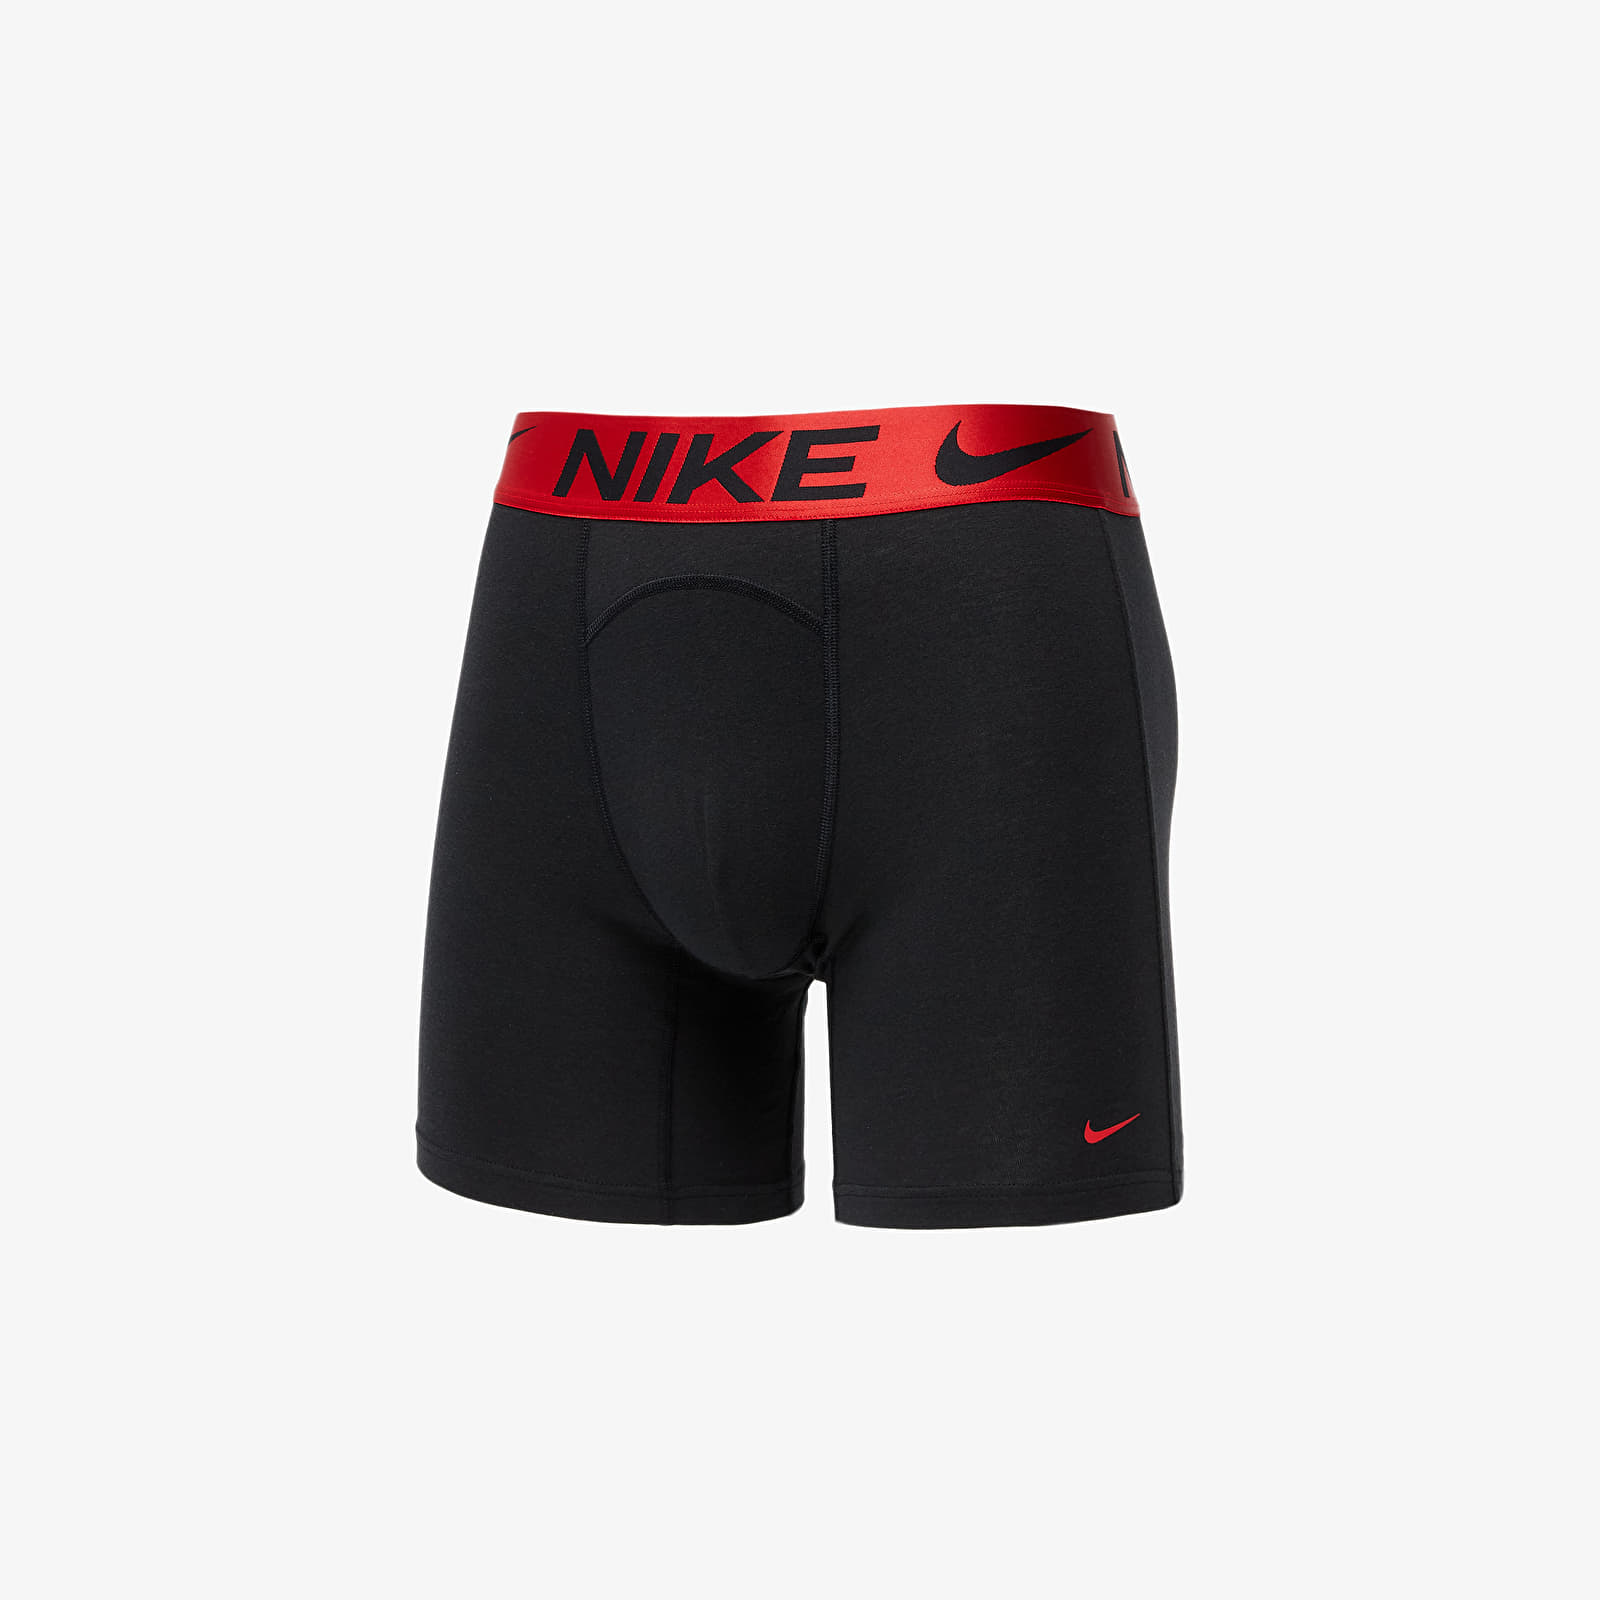 Lenjerie Nike Boxer Briefs Black/ University Red